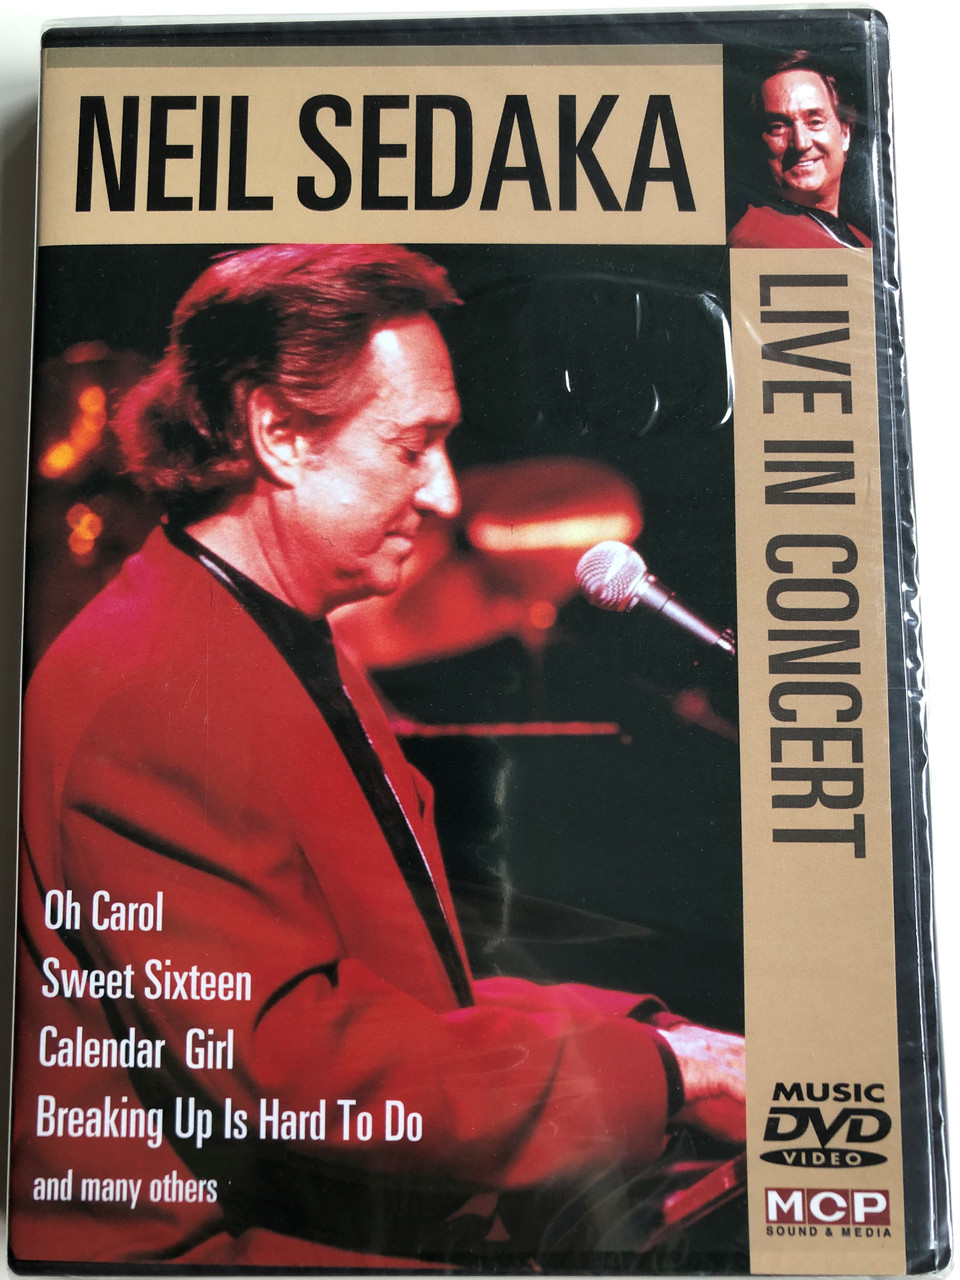 Neil Sedaka - Live in Concert DVD Oh Carol, Sweet Sixteen, Calendar Girl /  MCP sound & media - bibleinmylanguage